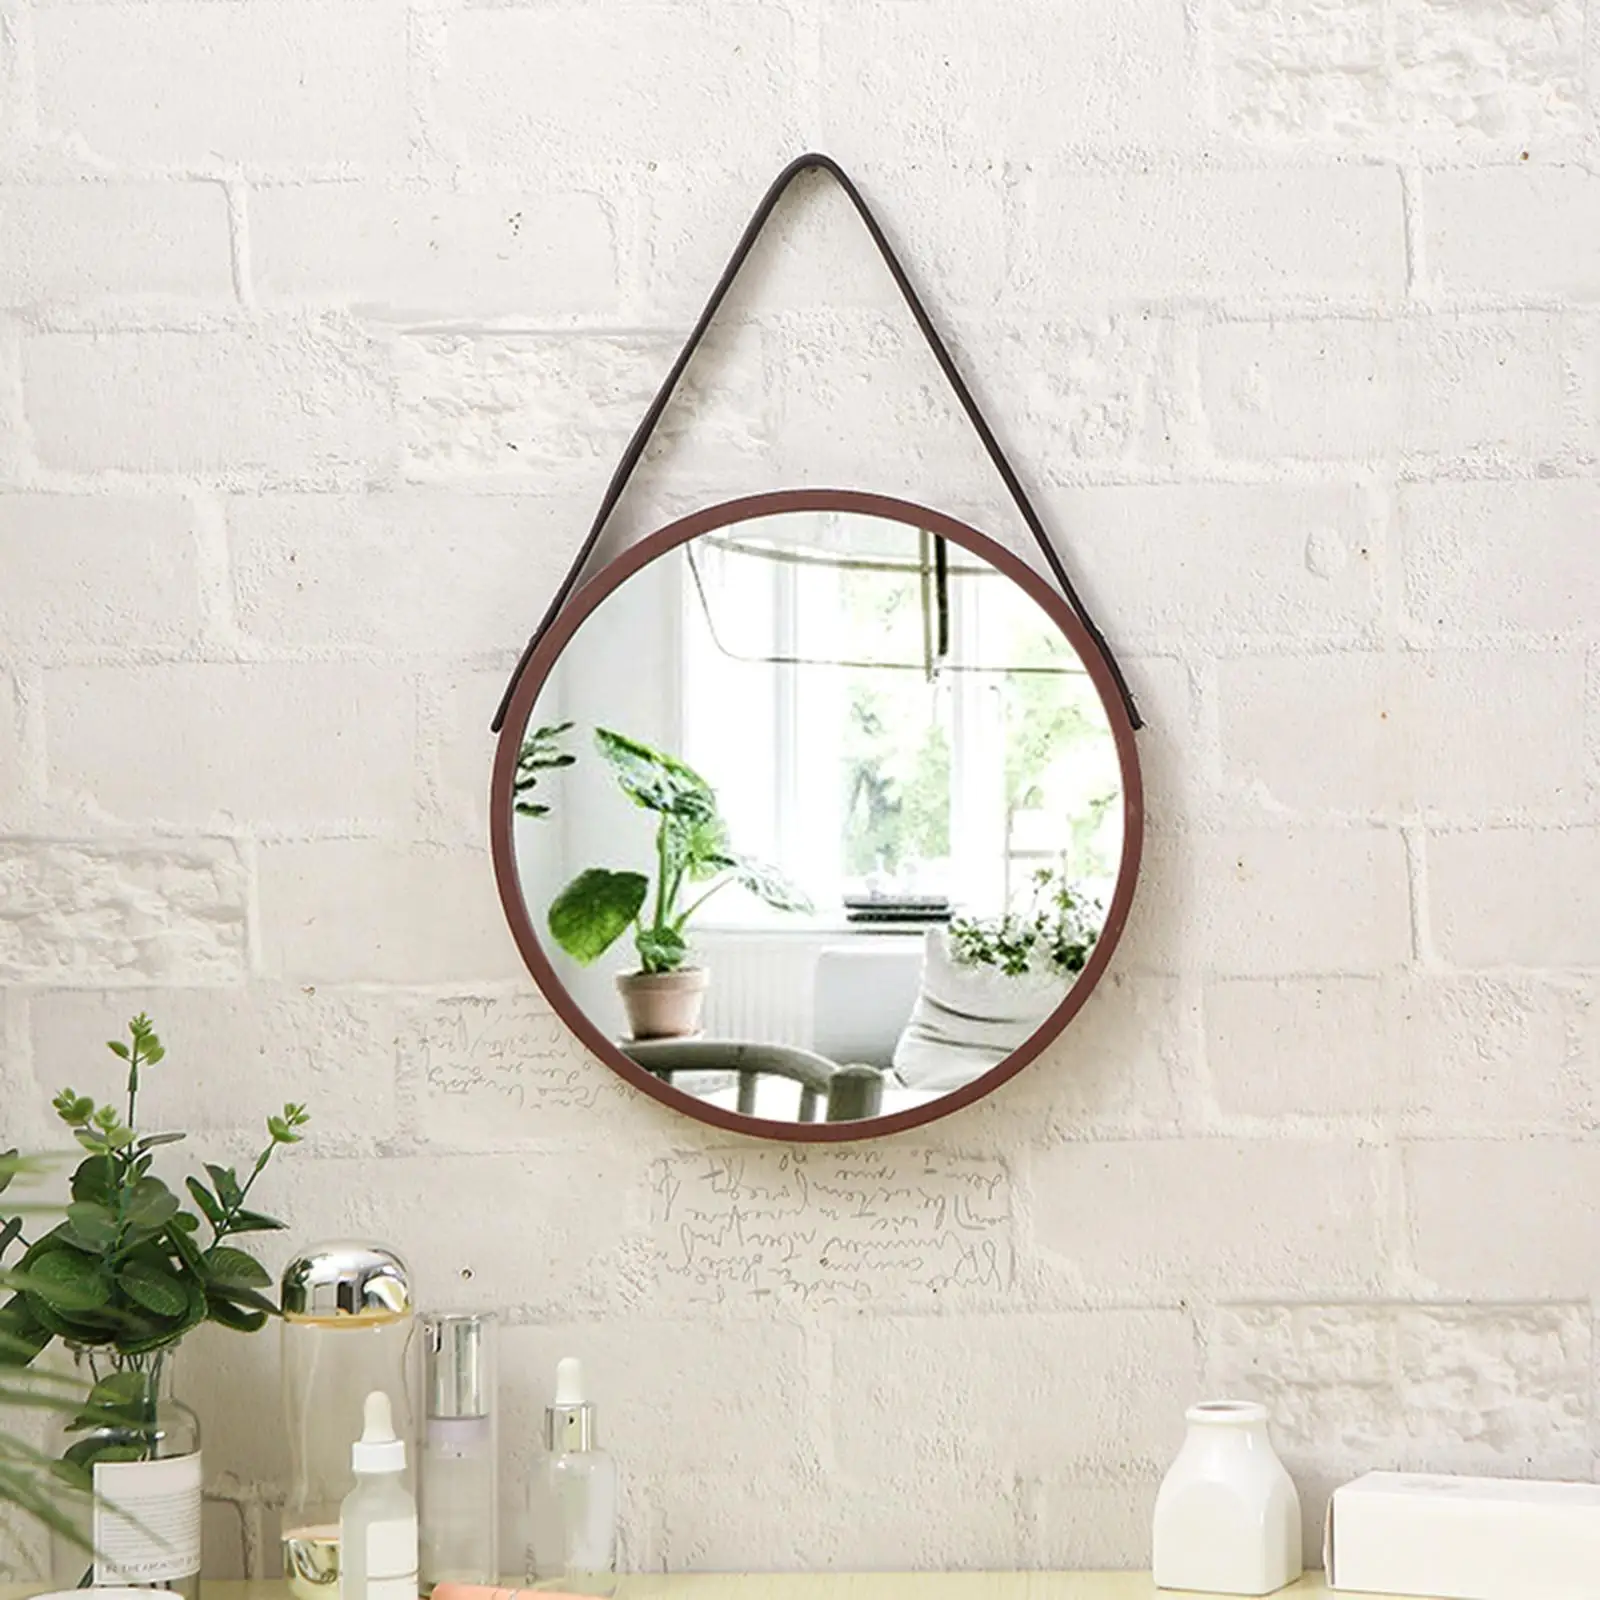 Hanging Wall Mounted Circle Mirror for Bedroom Bathroom Salon